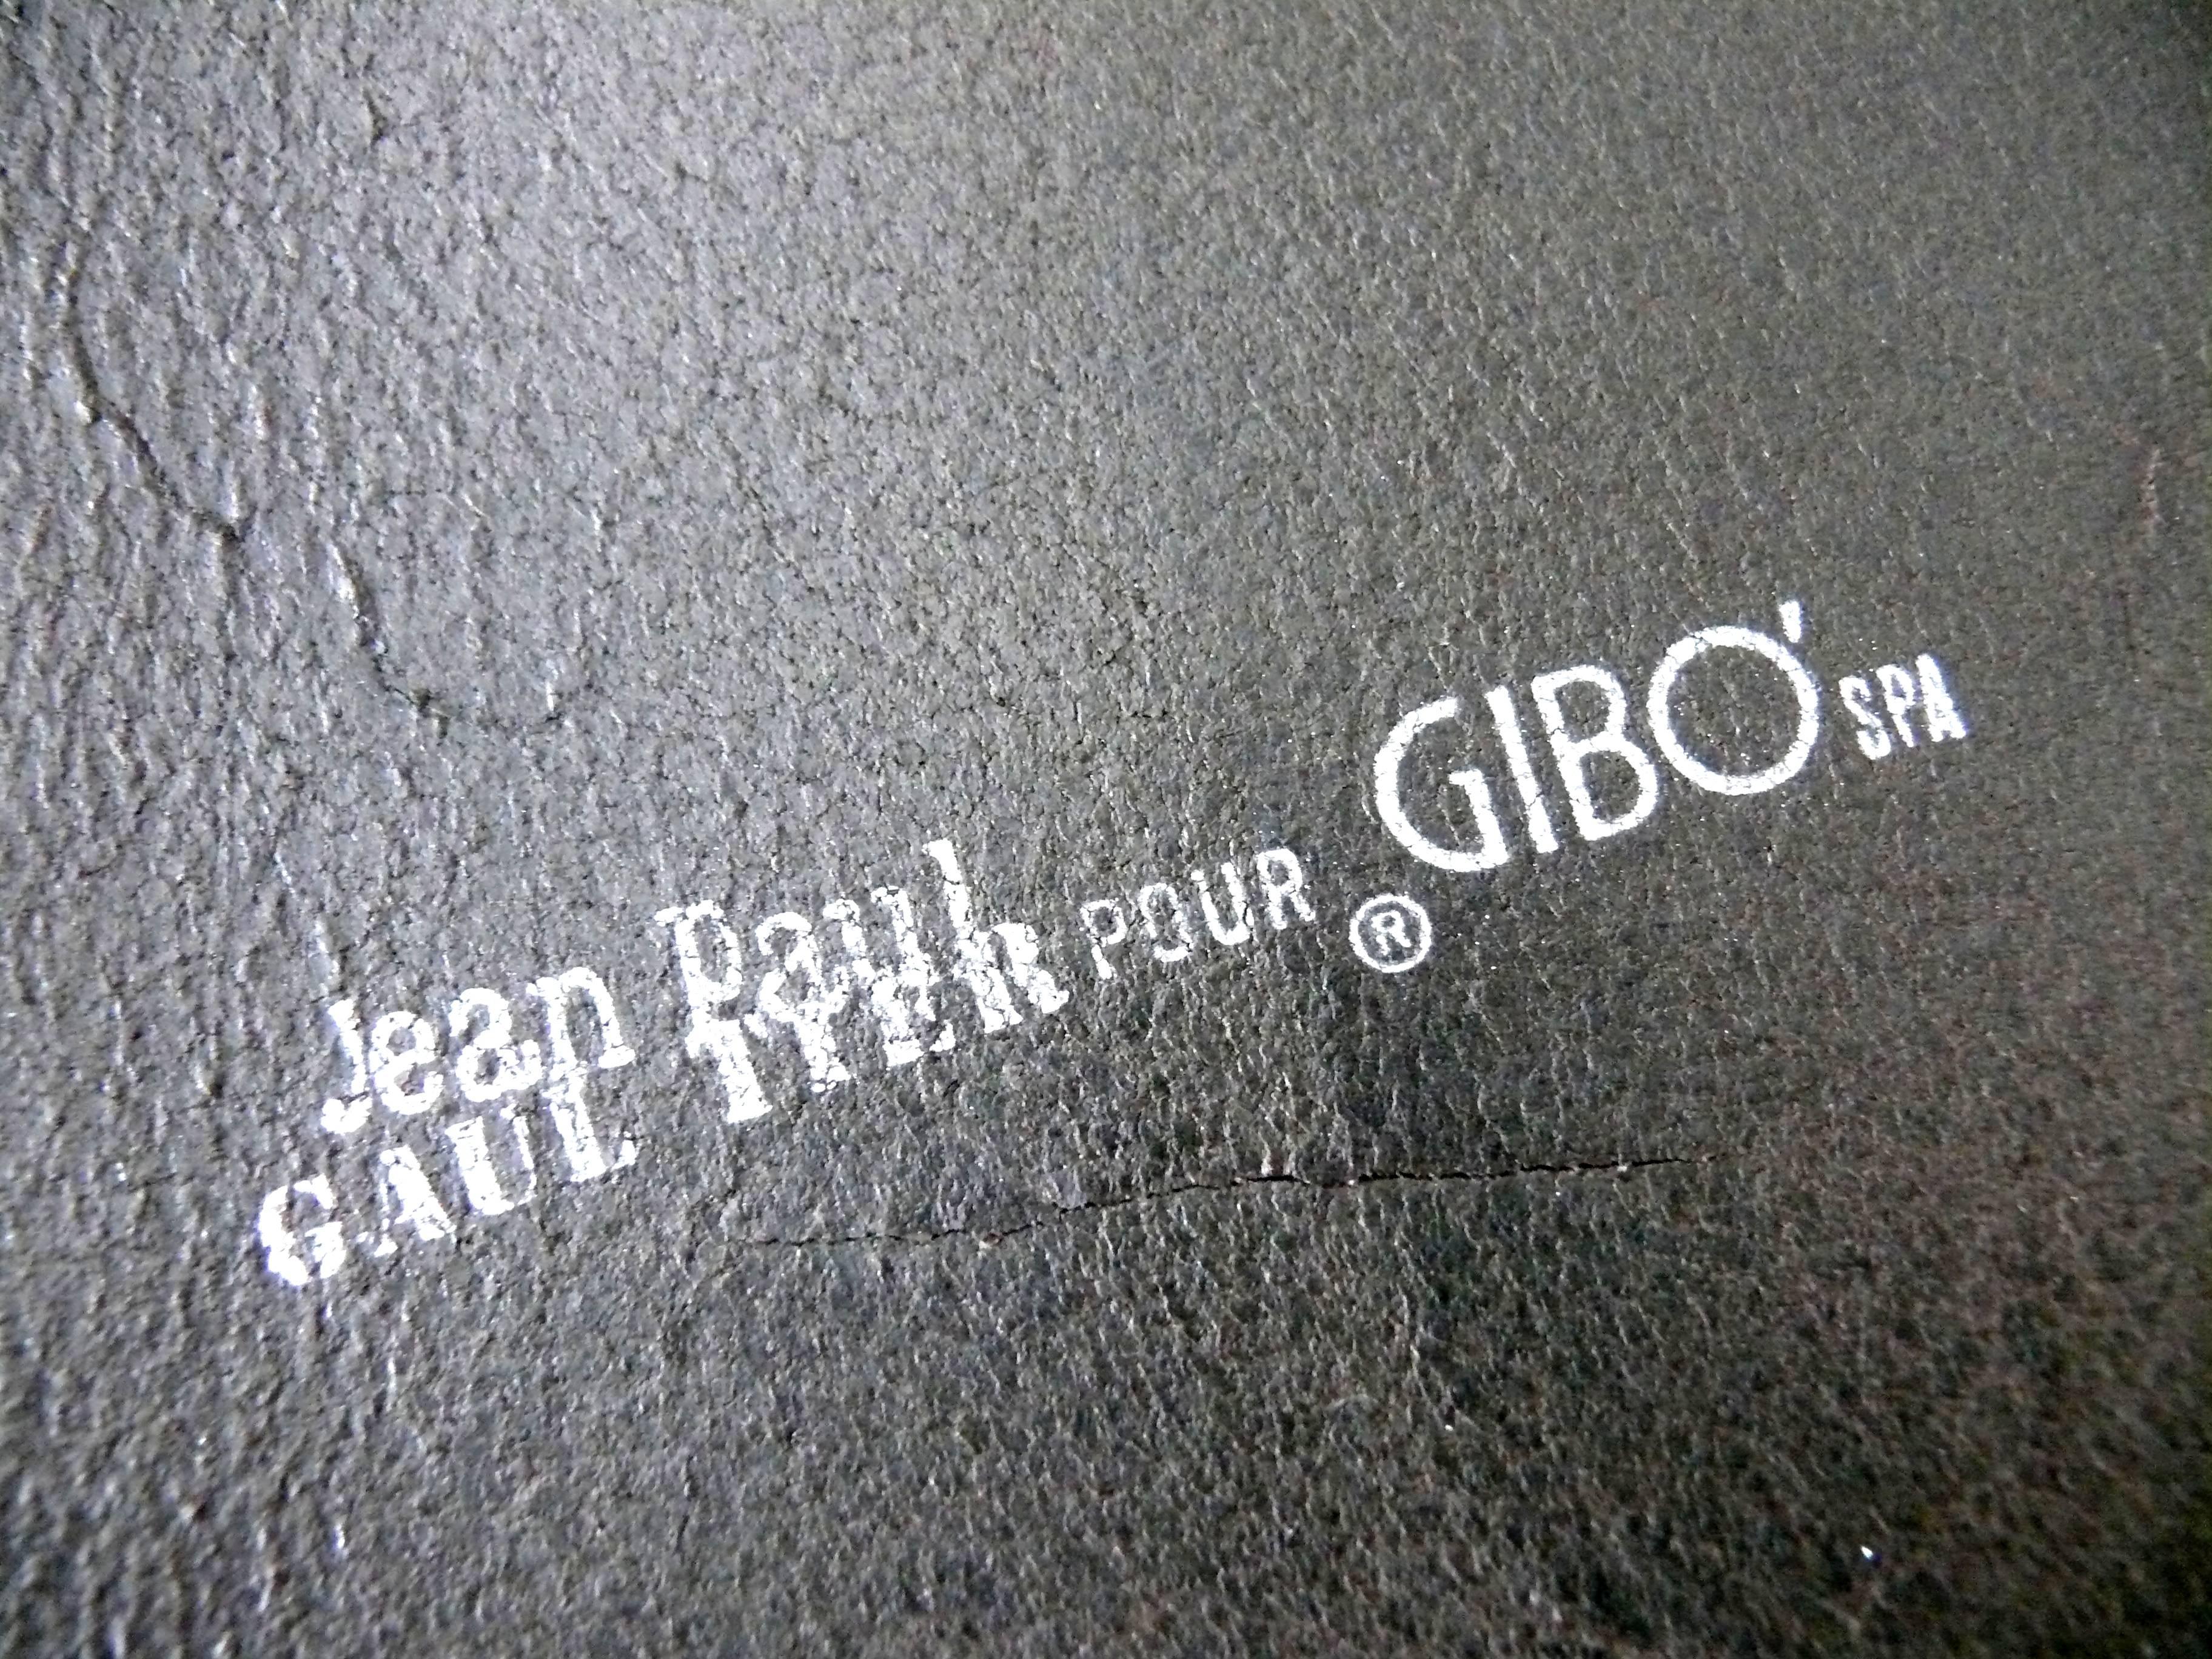 Jean Paul Gaultier Gibo Vintage Rare Wide Black Corset Leather Belt 1